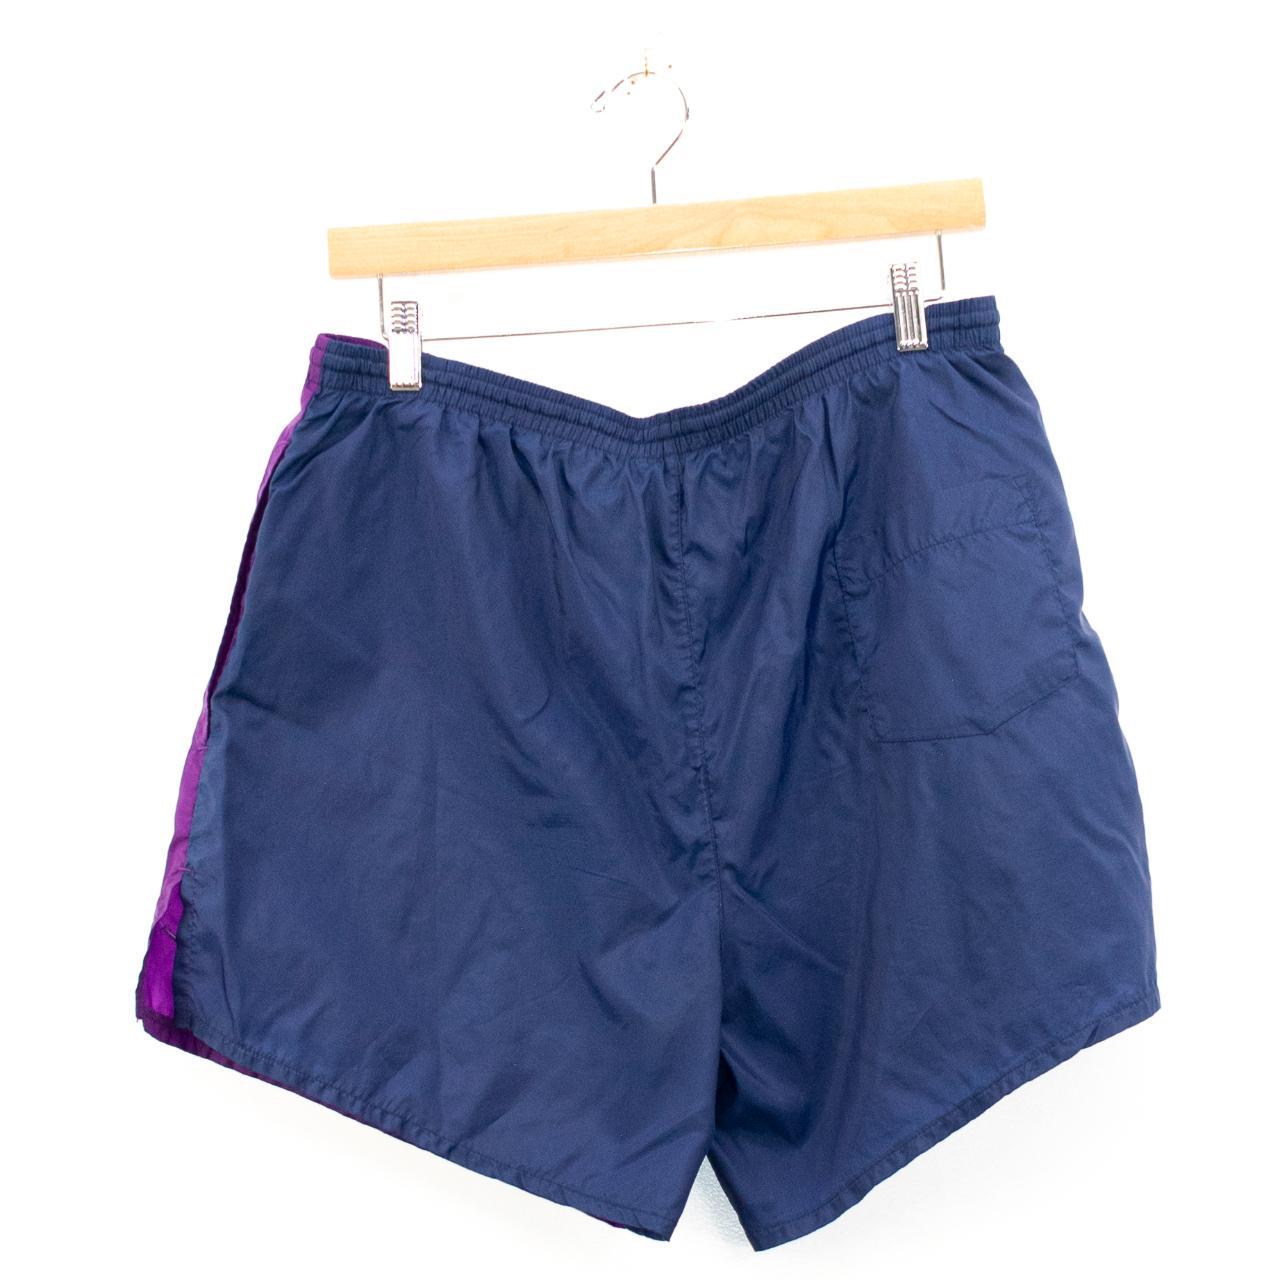 Nike Men's Navy and Purple Swim-briefs-shorts (2)